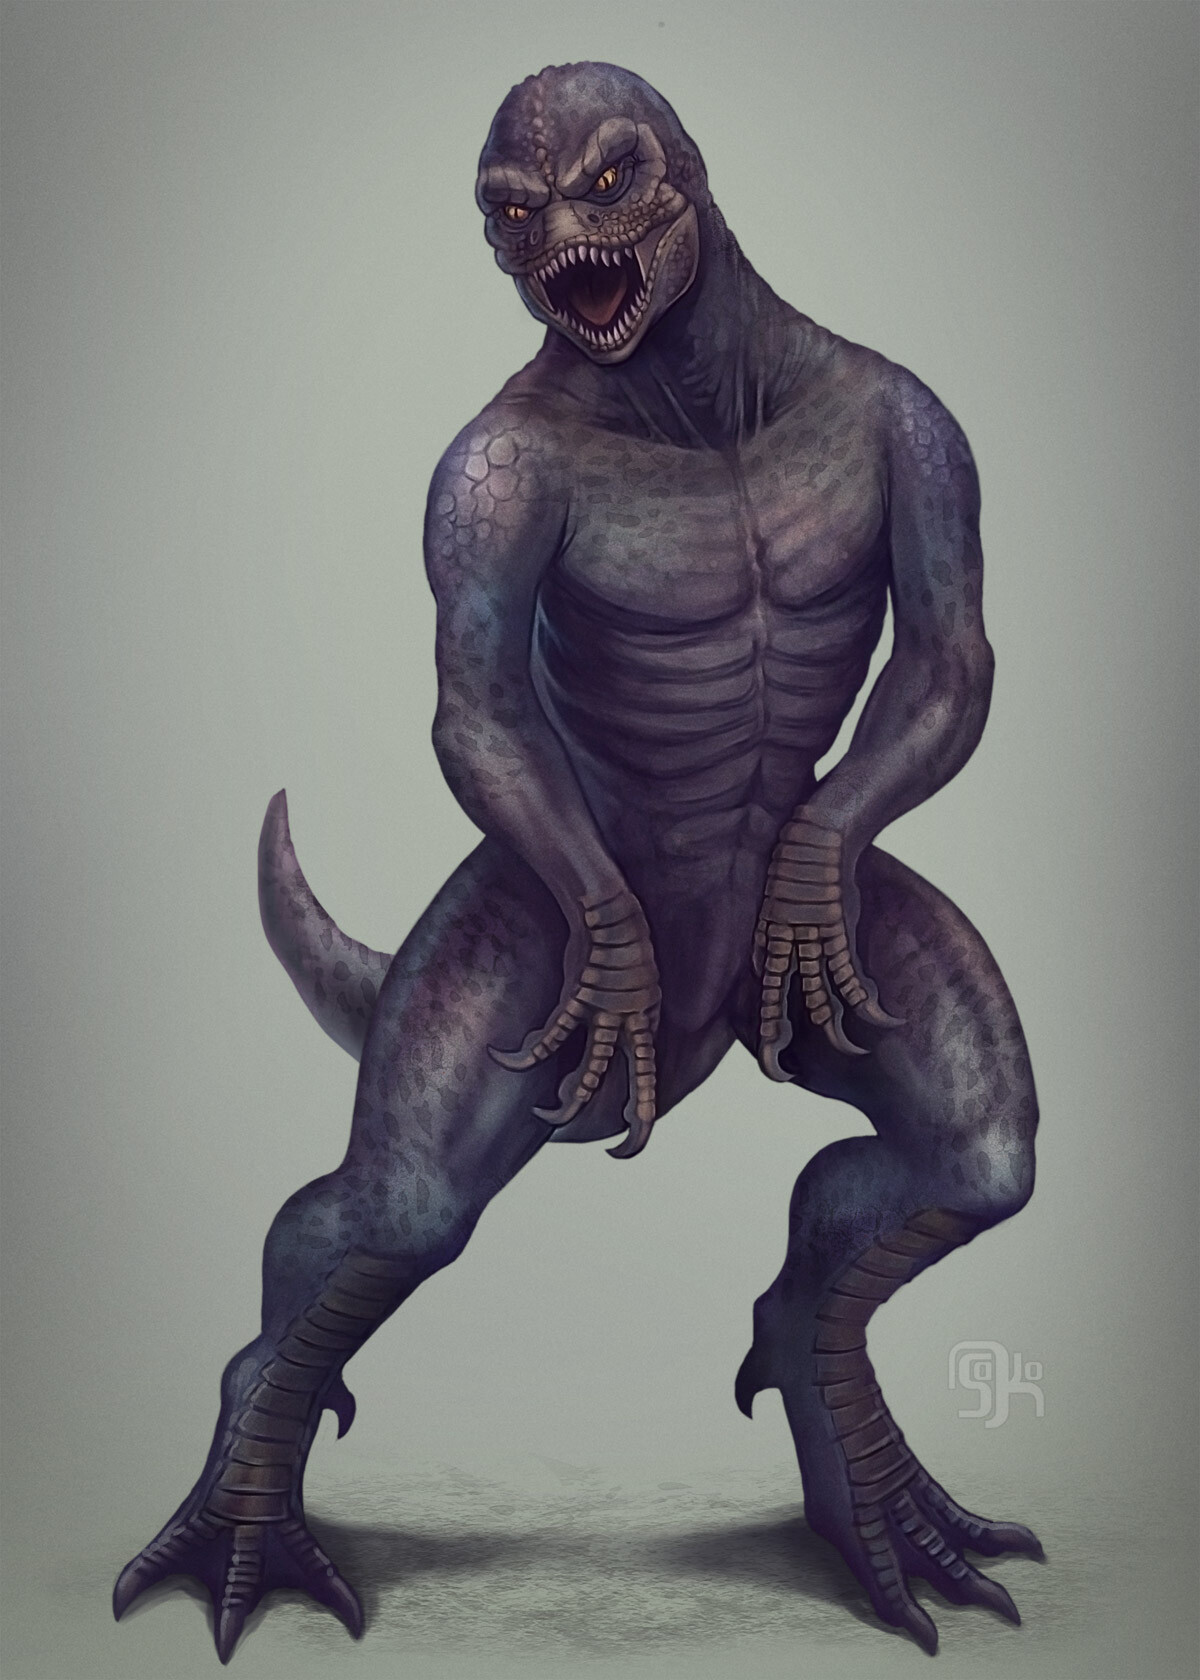 real reptilian humanoid